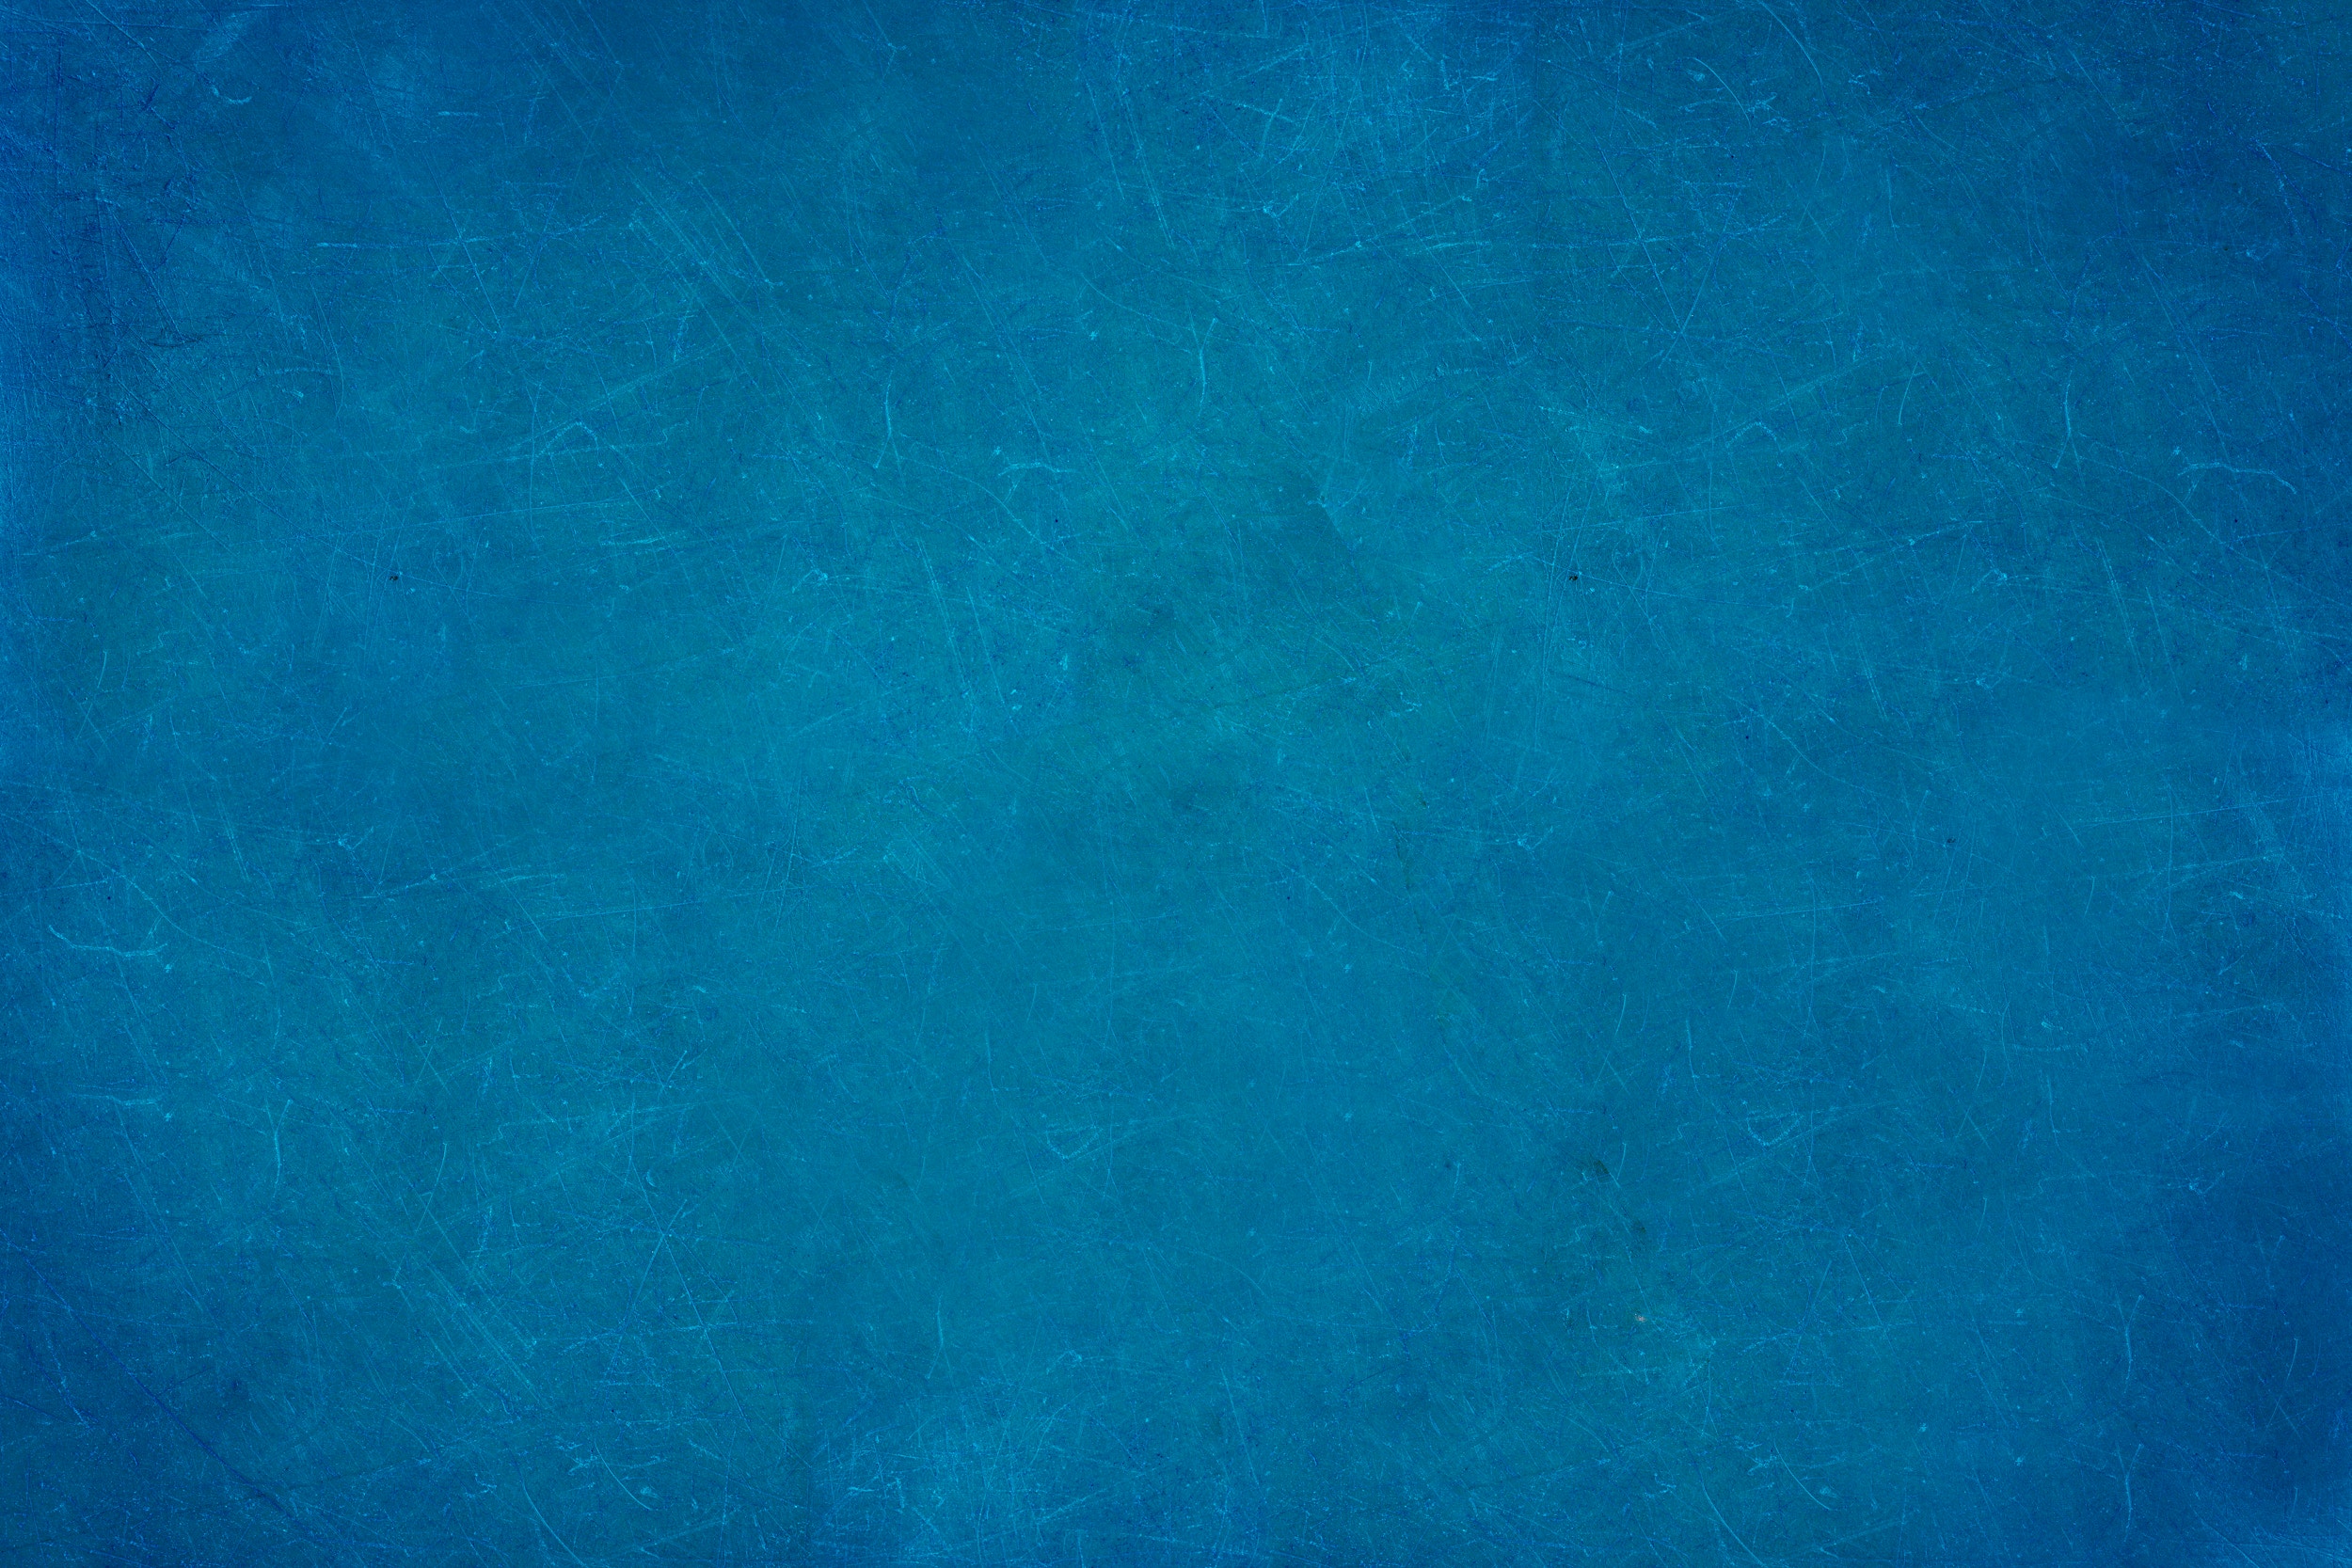 blue background backgrounds freetoedit image by @freetoedit